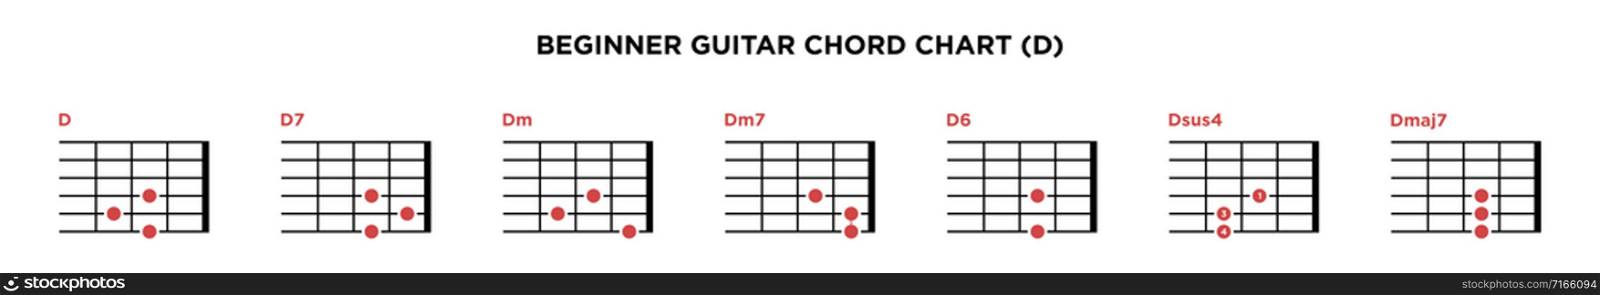 Basic Guitar Chord Chart Icon Vector Template. D key guitar chord.